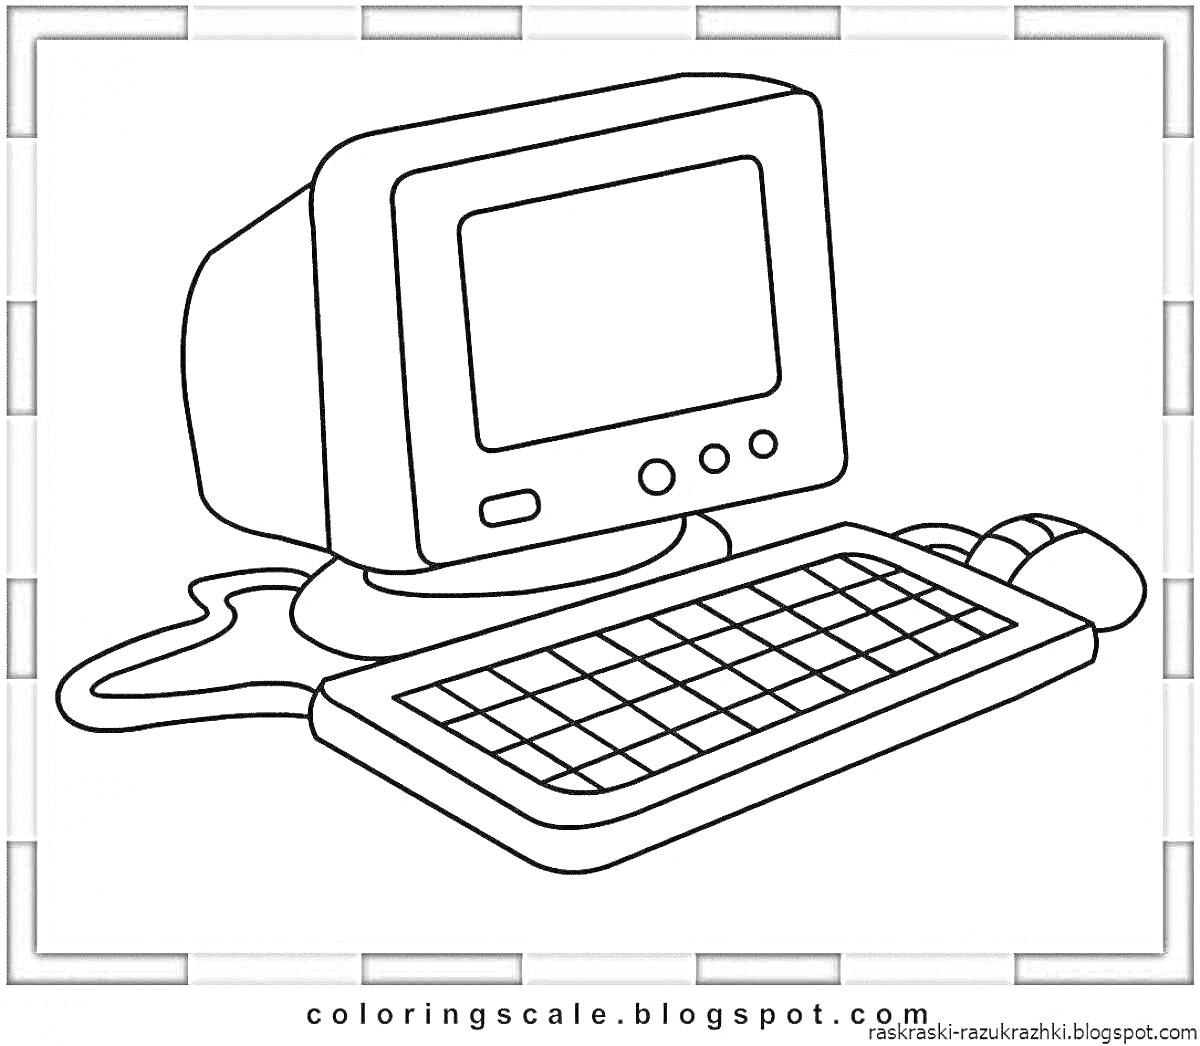 На раскраске изображено: Компьютер, Монитор, Клавиатура, Мышь, Электроника, Техника